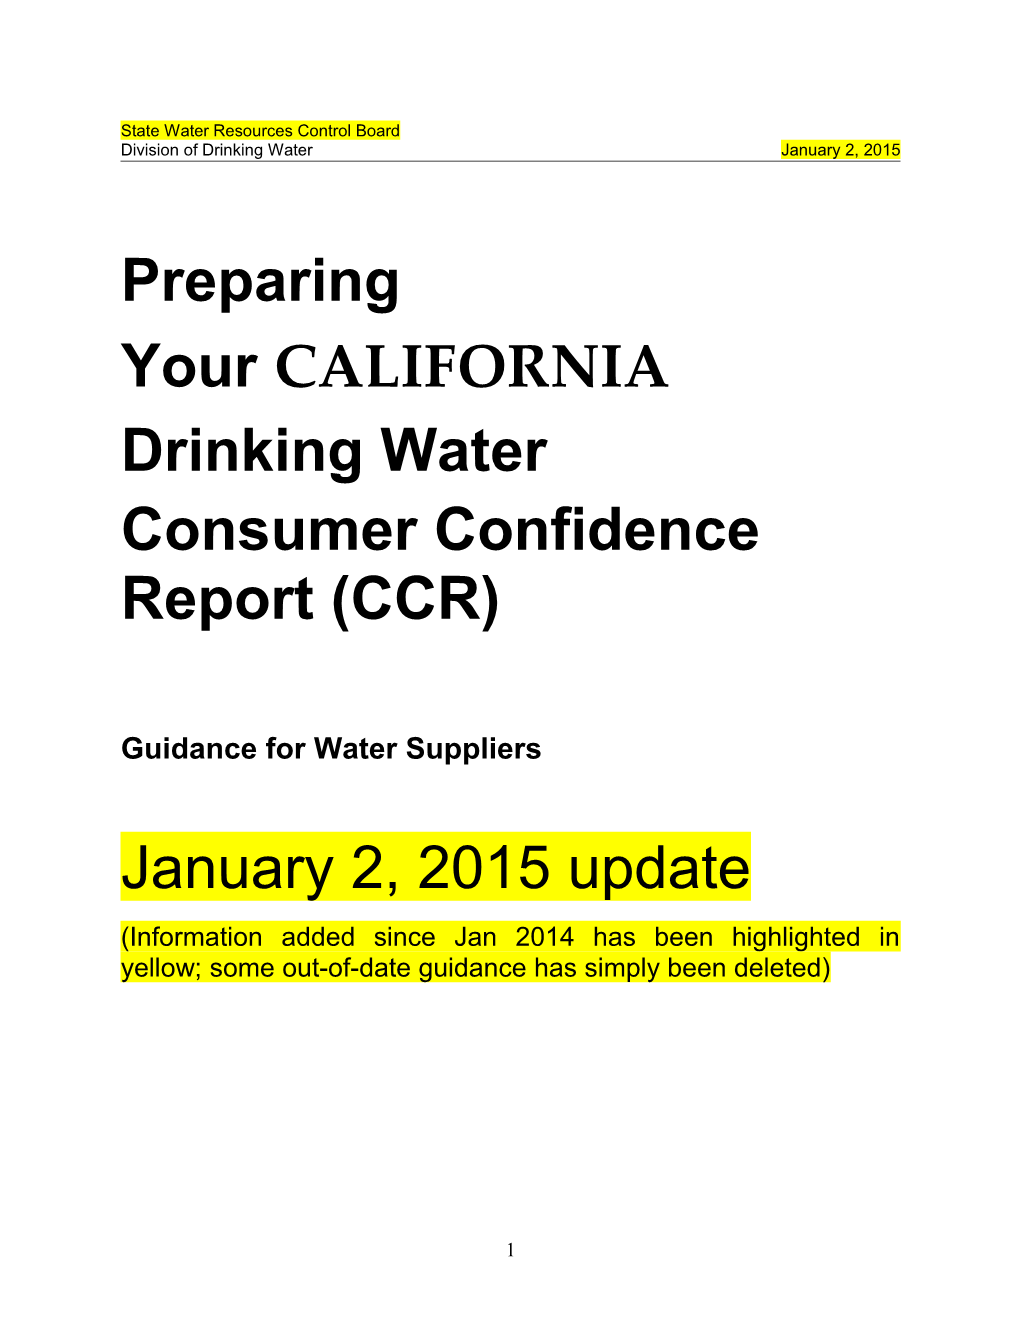 CCR Guidance Manual - for 2013 Data